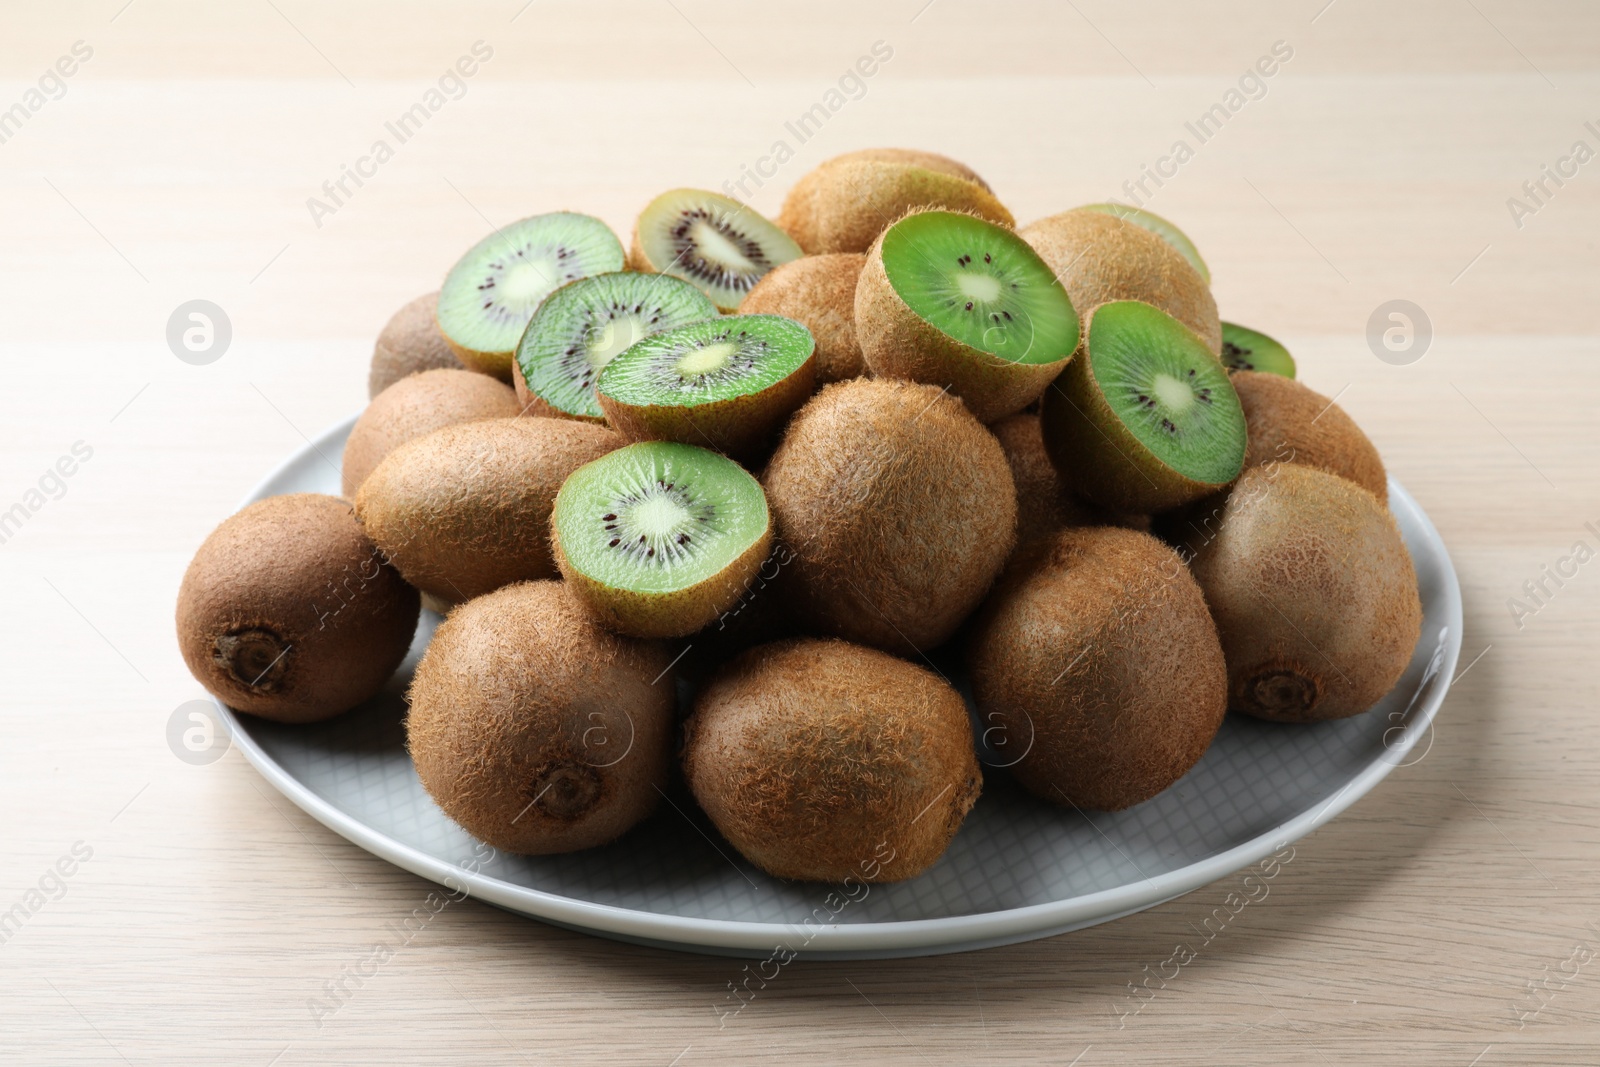 Photo of Fresh ripe kiwis on light wooden table